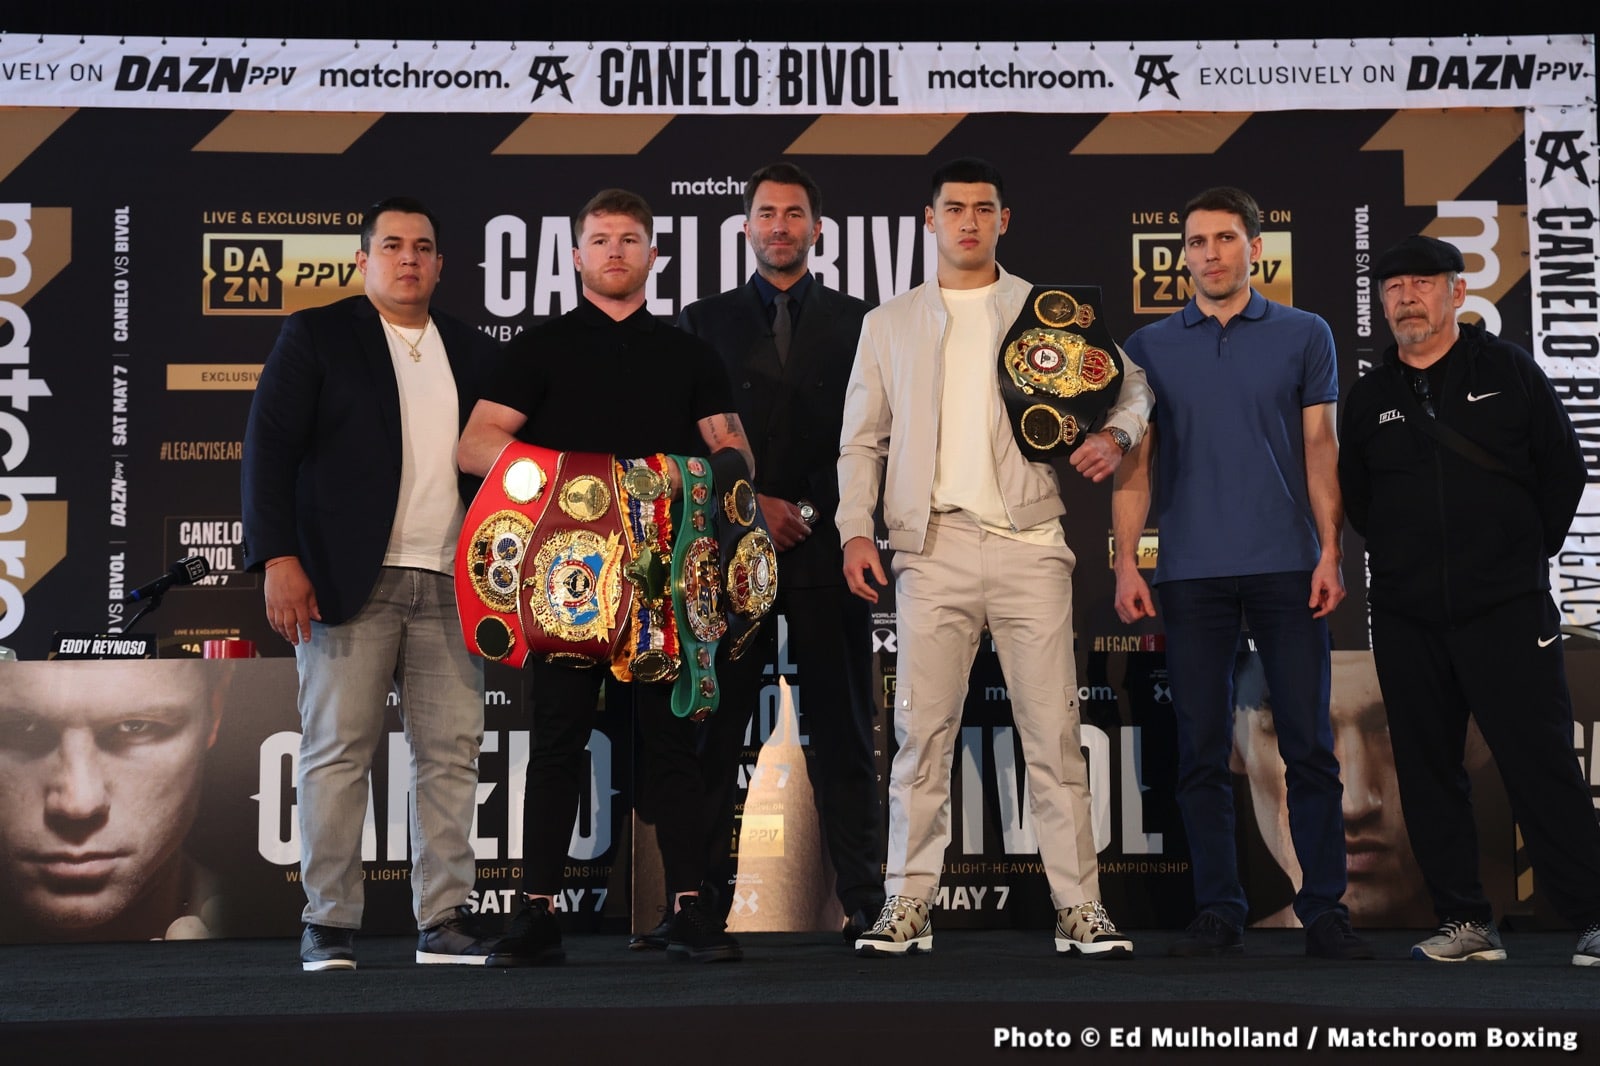 Canelo Alvarez, Dmitry Bivol boxeo foto e imagen de noticia